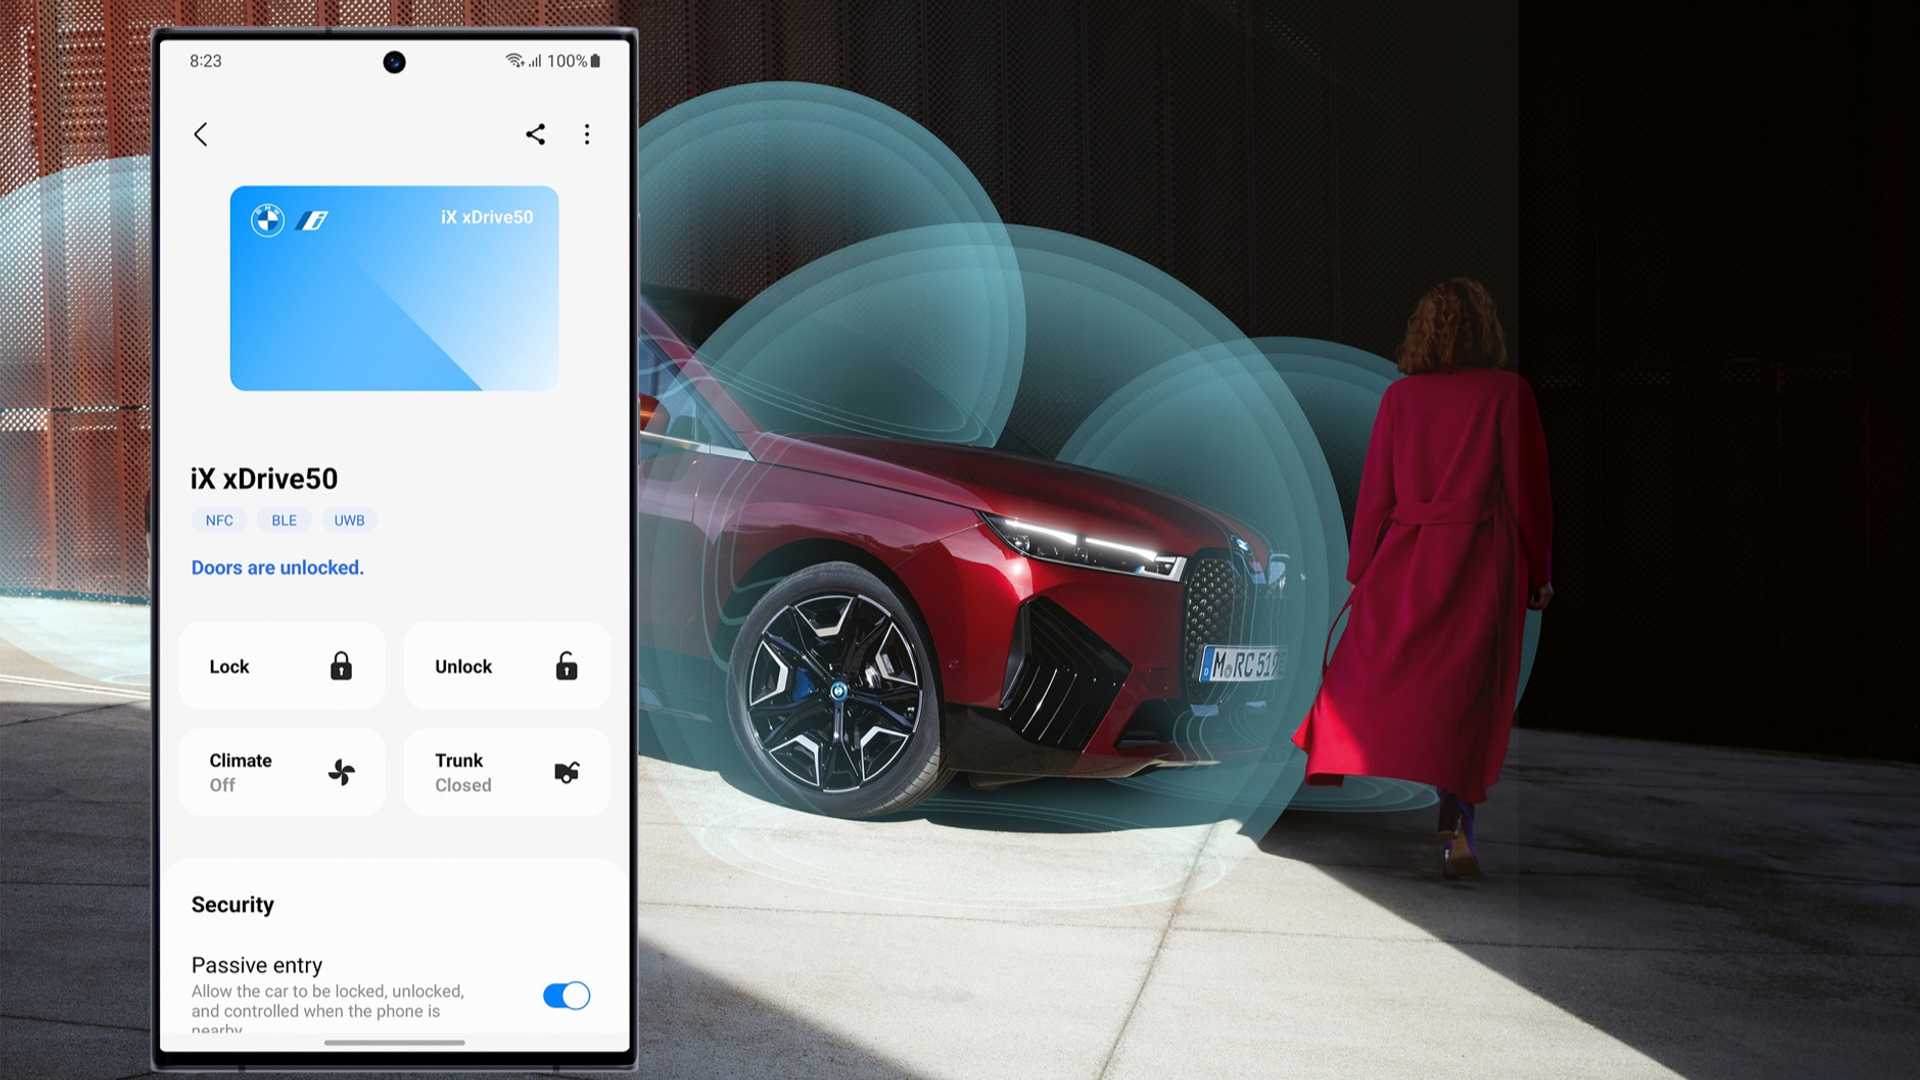 BMW Digital Key Plus Android